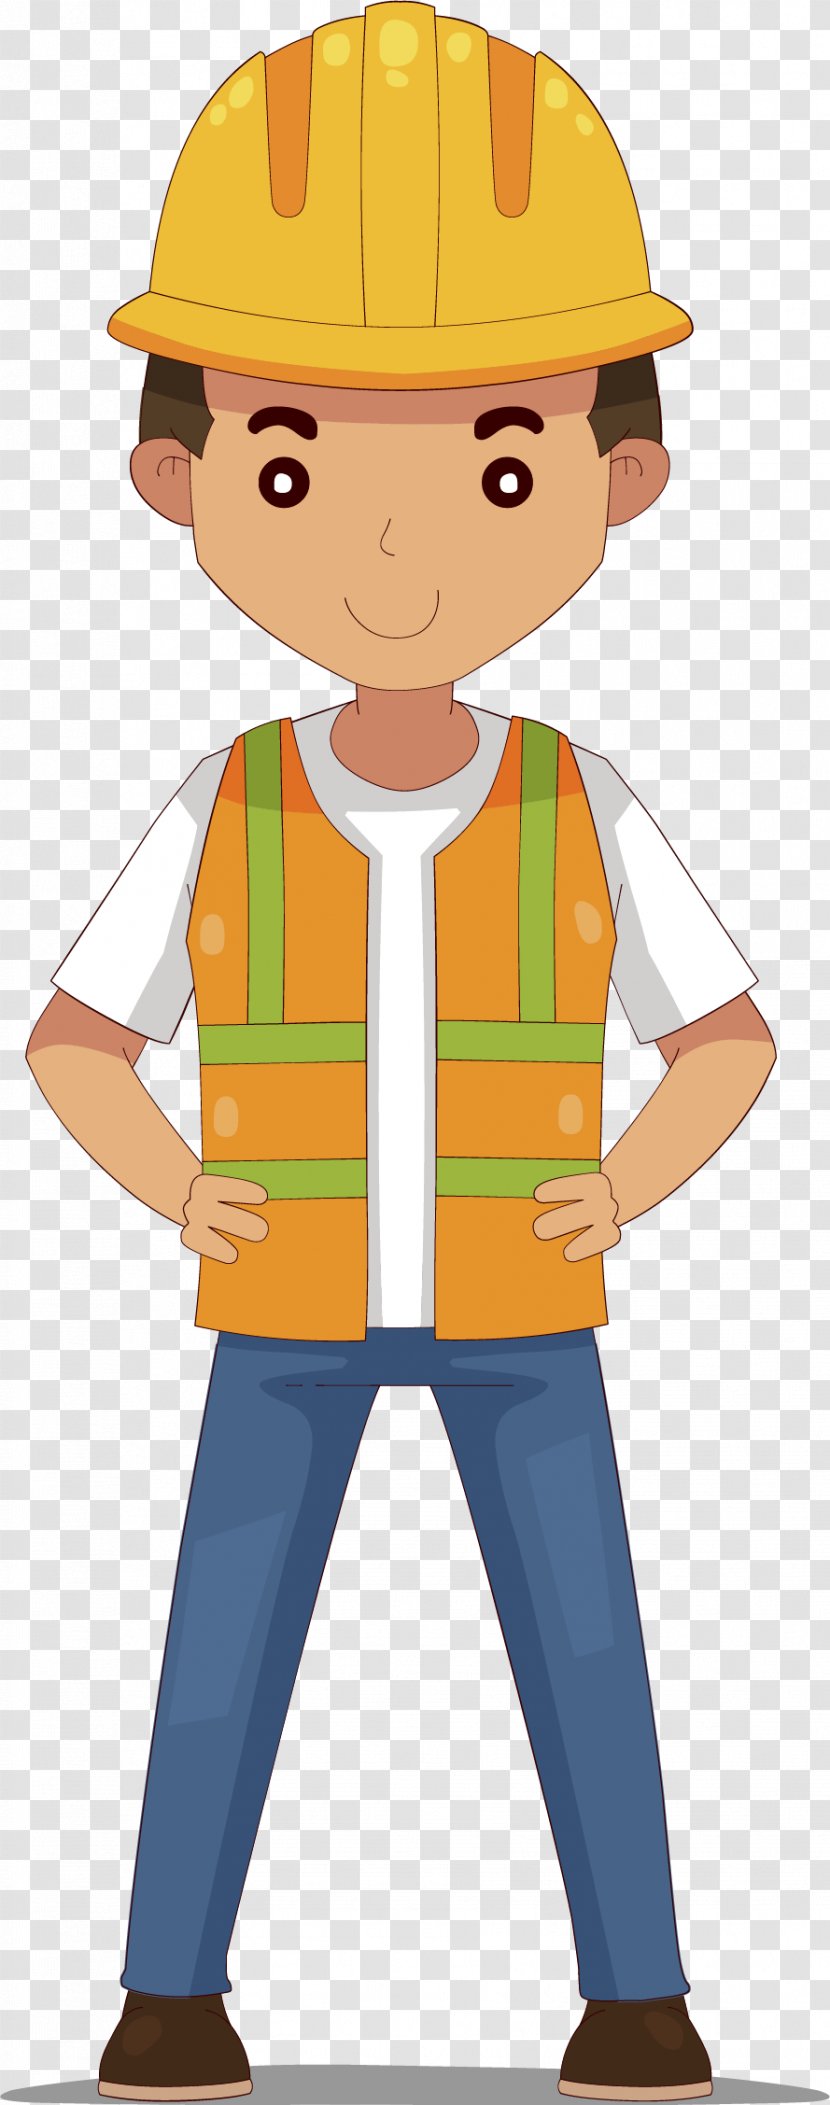 Civil Engineering Maintenance - Uniform - Cartoon Hand-painted Helmet Engineer Transparent PNG